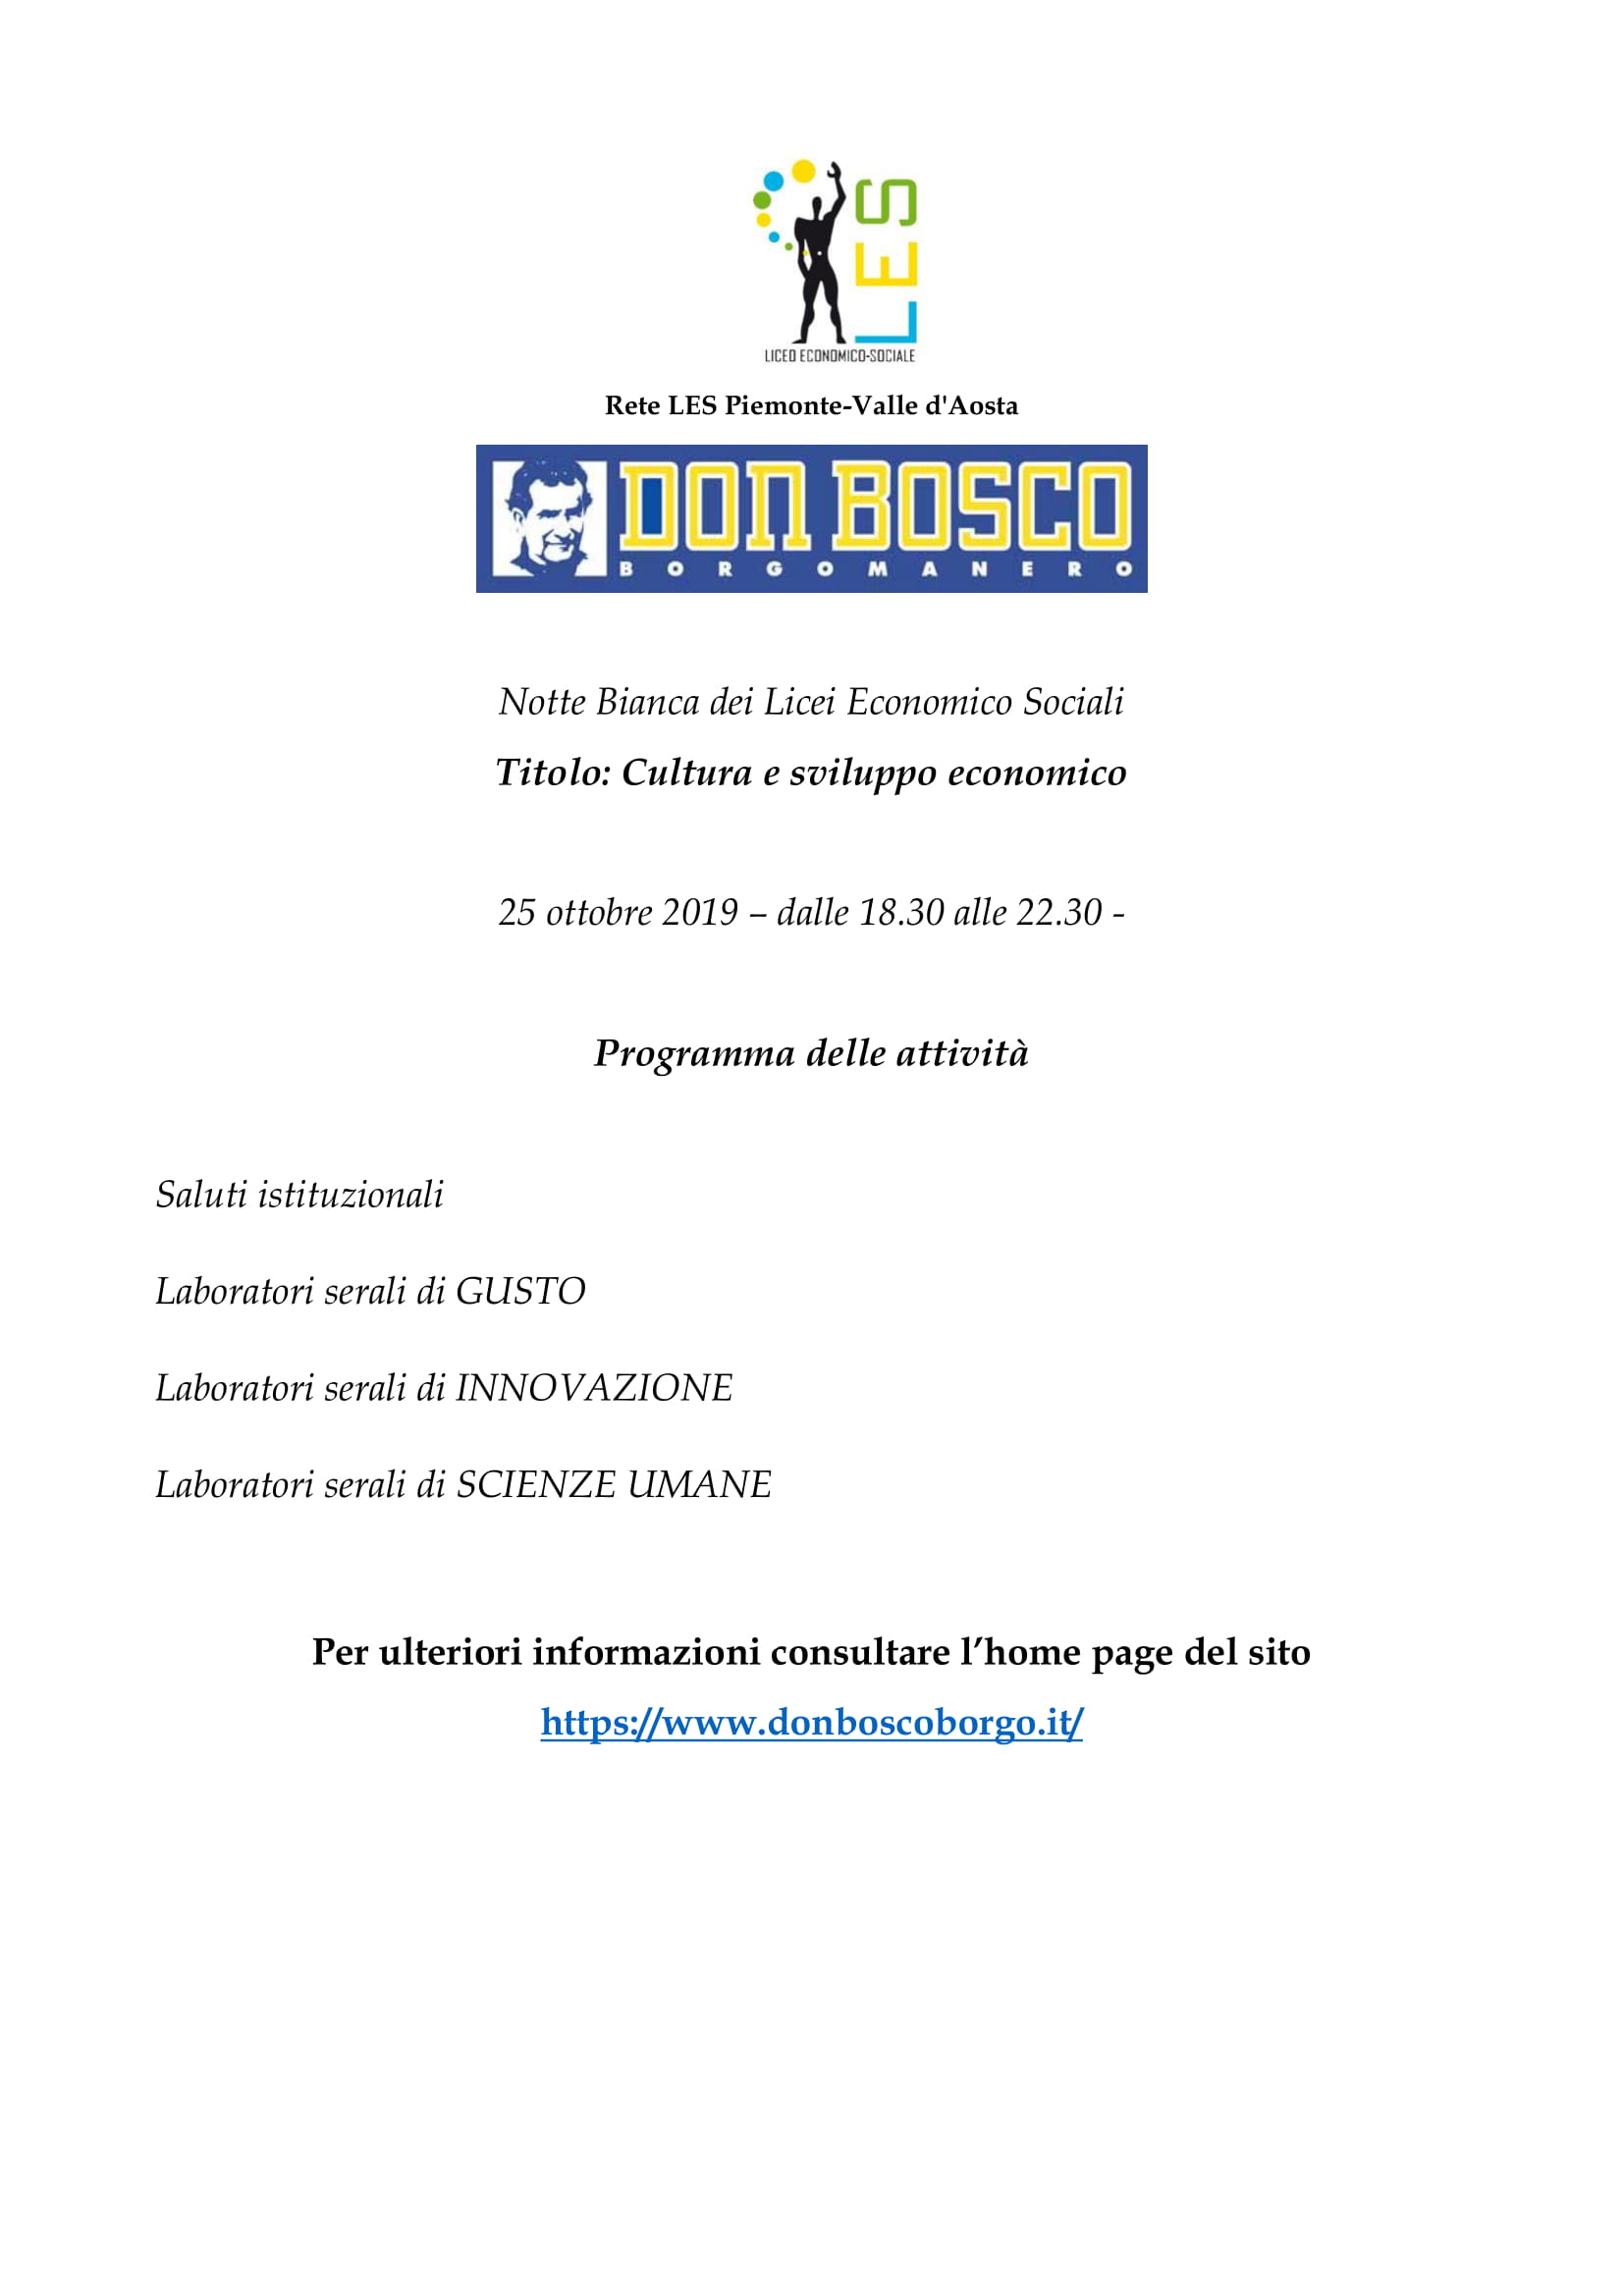 Istituto Don Bosco Borgomanero Notte Bianca LES 2019 1